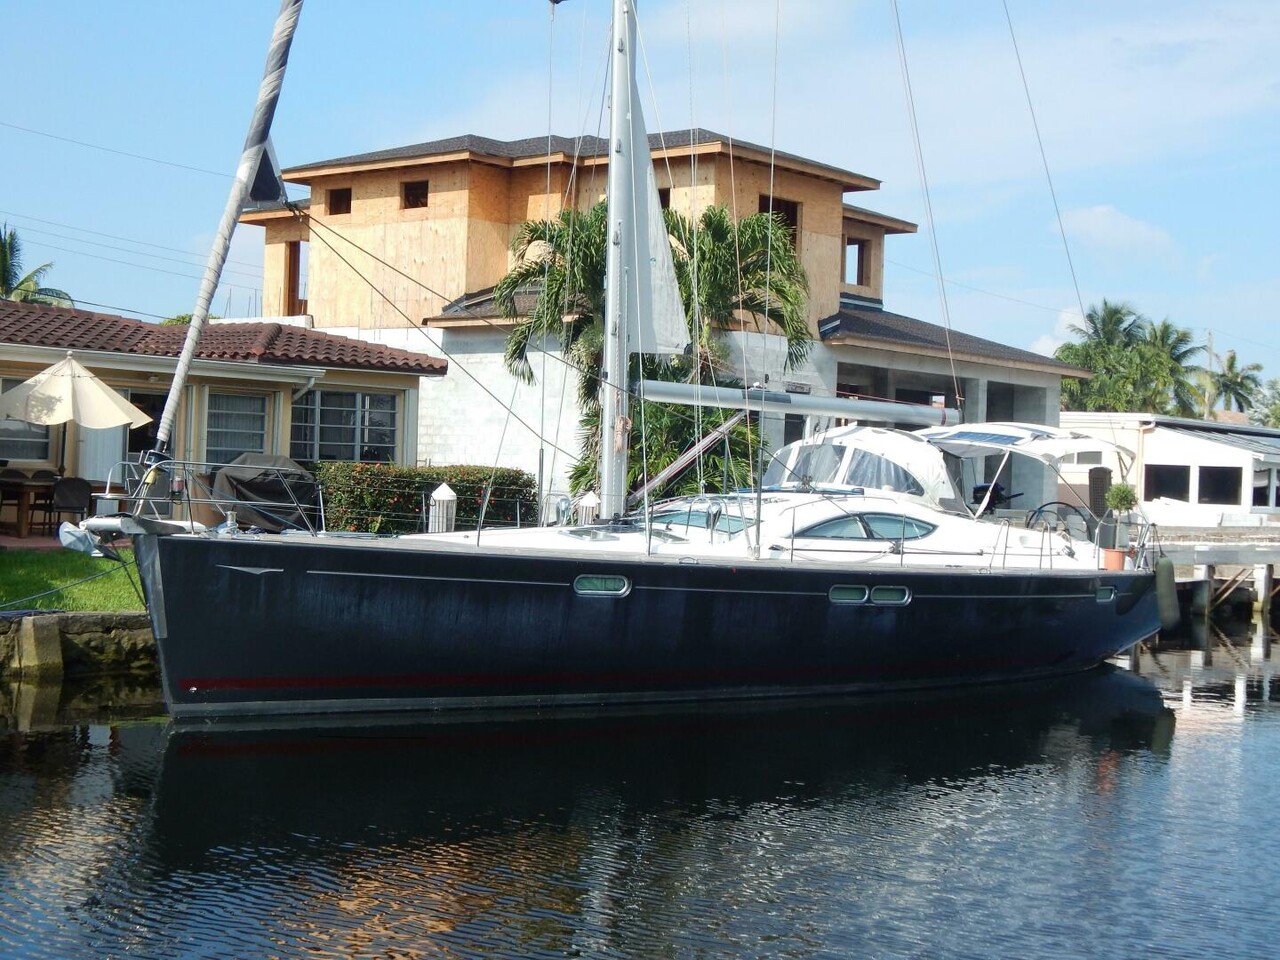 Jeanneau (sailboat) for sale